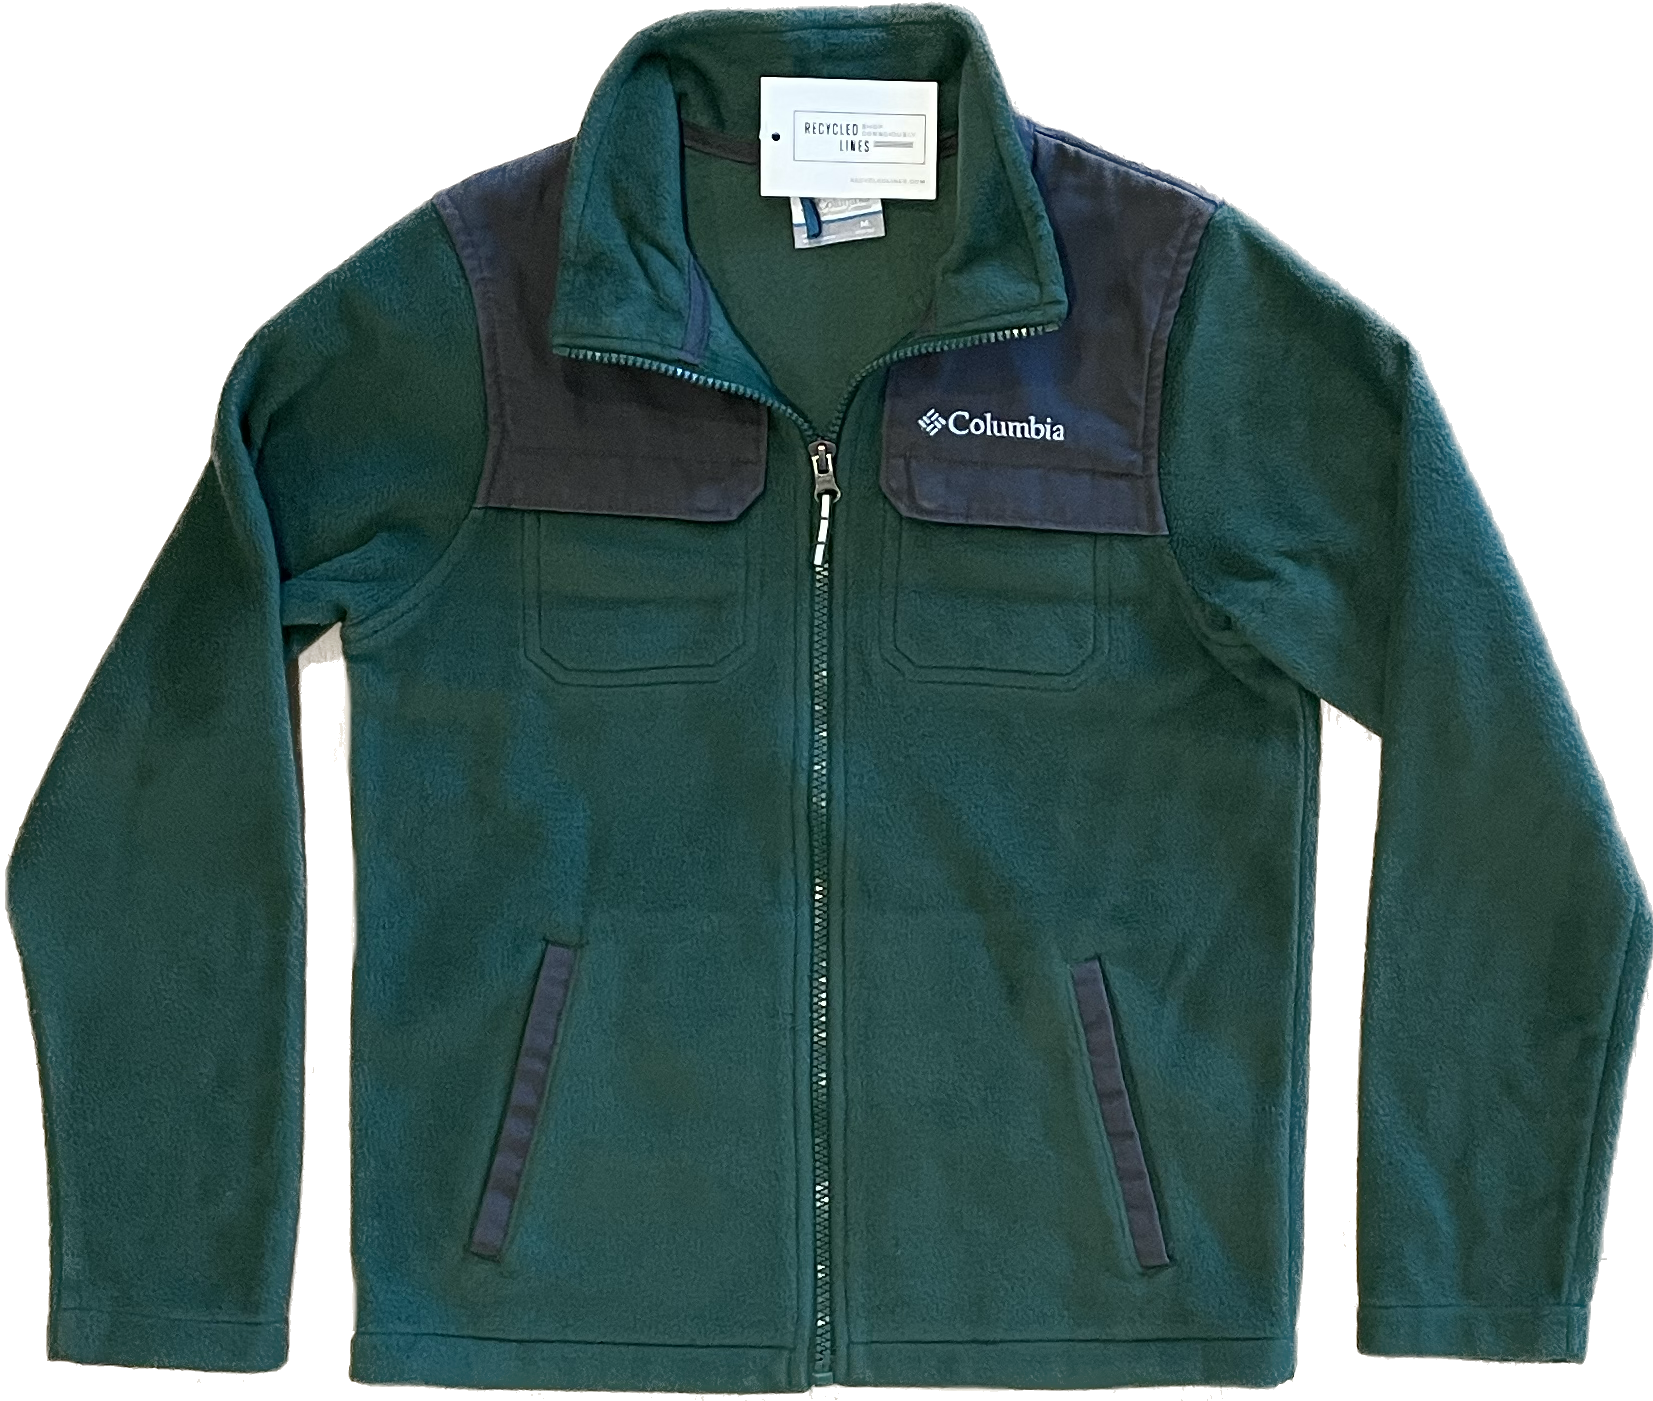 Columbia Fleece Jacket, Green Boys Size M (10/12)